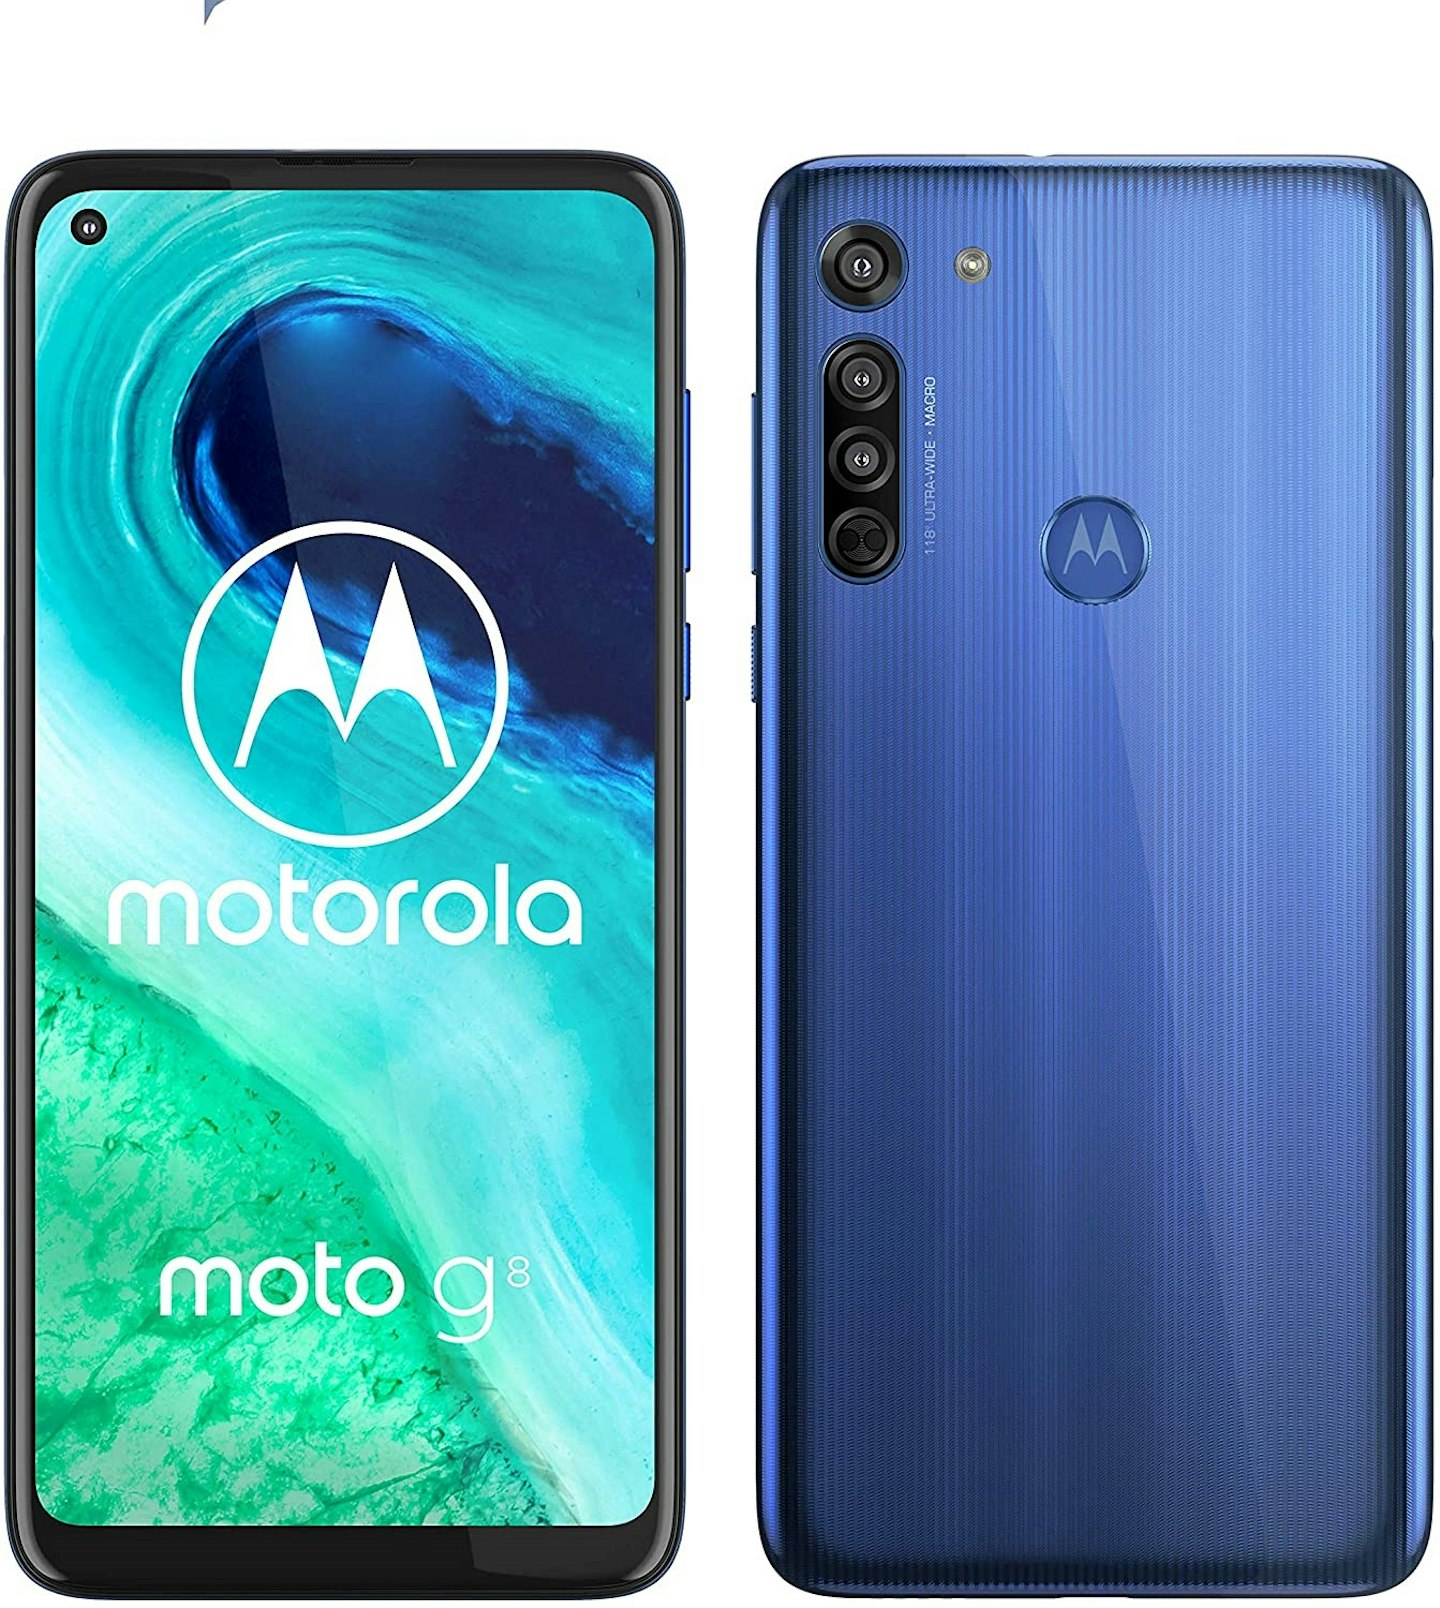 Motorola Moto G8 (6,4" HD+ zero-notch display, Qualcomm Snapdragon SD665, 16MP main camera, 2MP macro camera, 4000 mAH battery, Dual SIM)